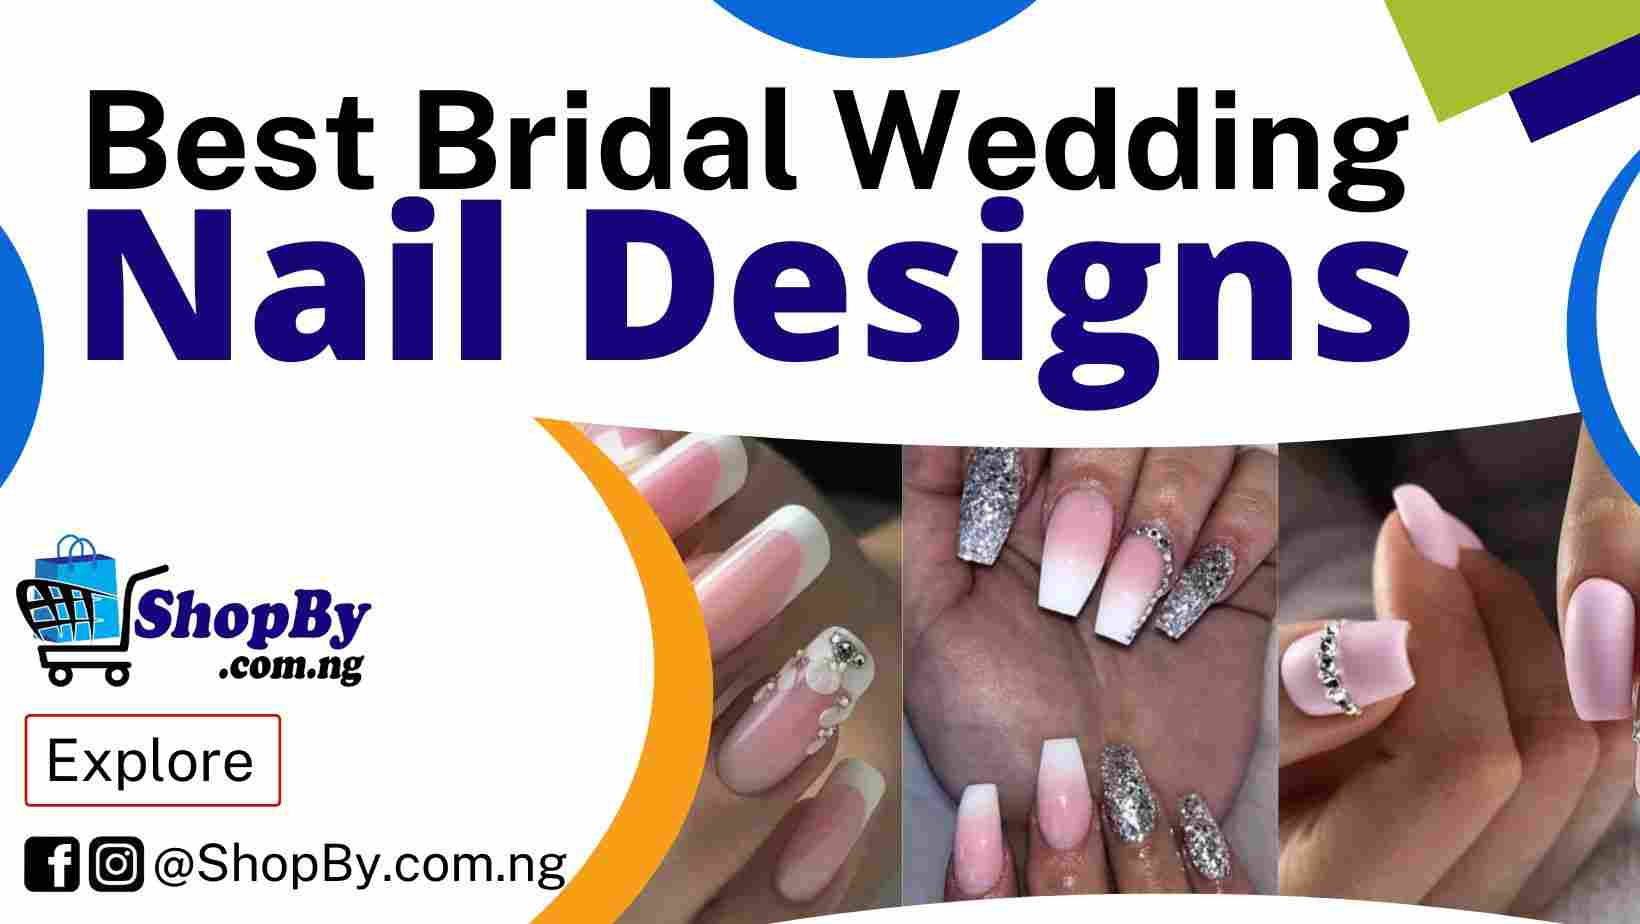 Best Bridal Wedding Nail Designs shopby online mall